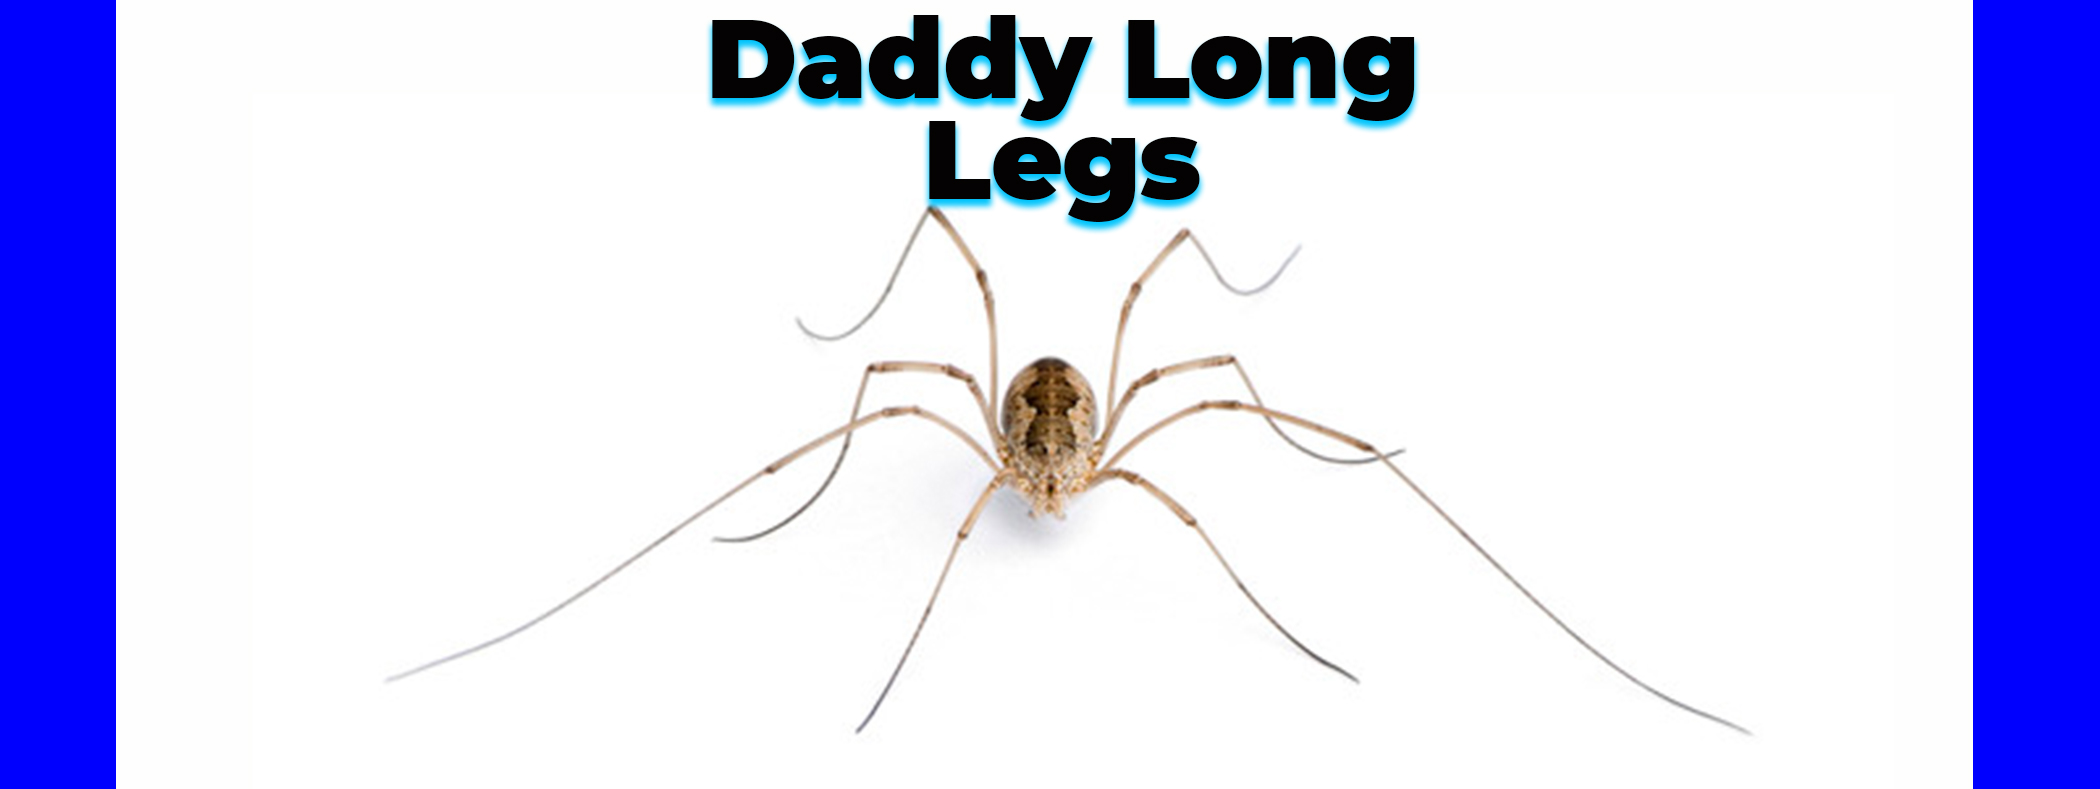 10 MIN STRETCH FOR SLIM & LONG LEGS (21 Day SLIM LEG Series